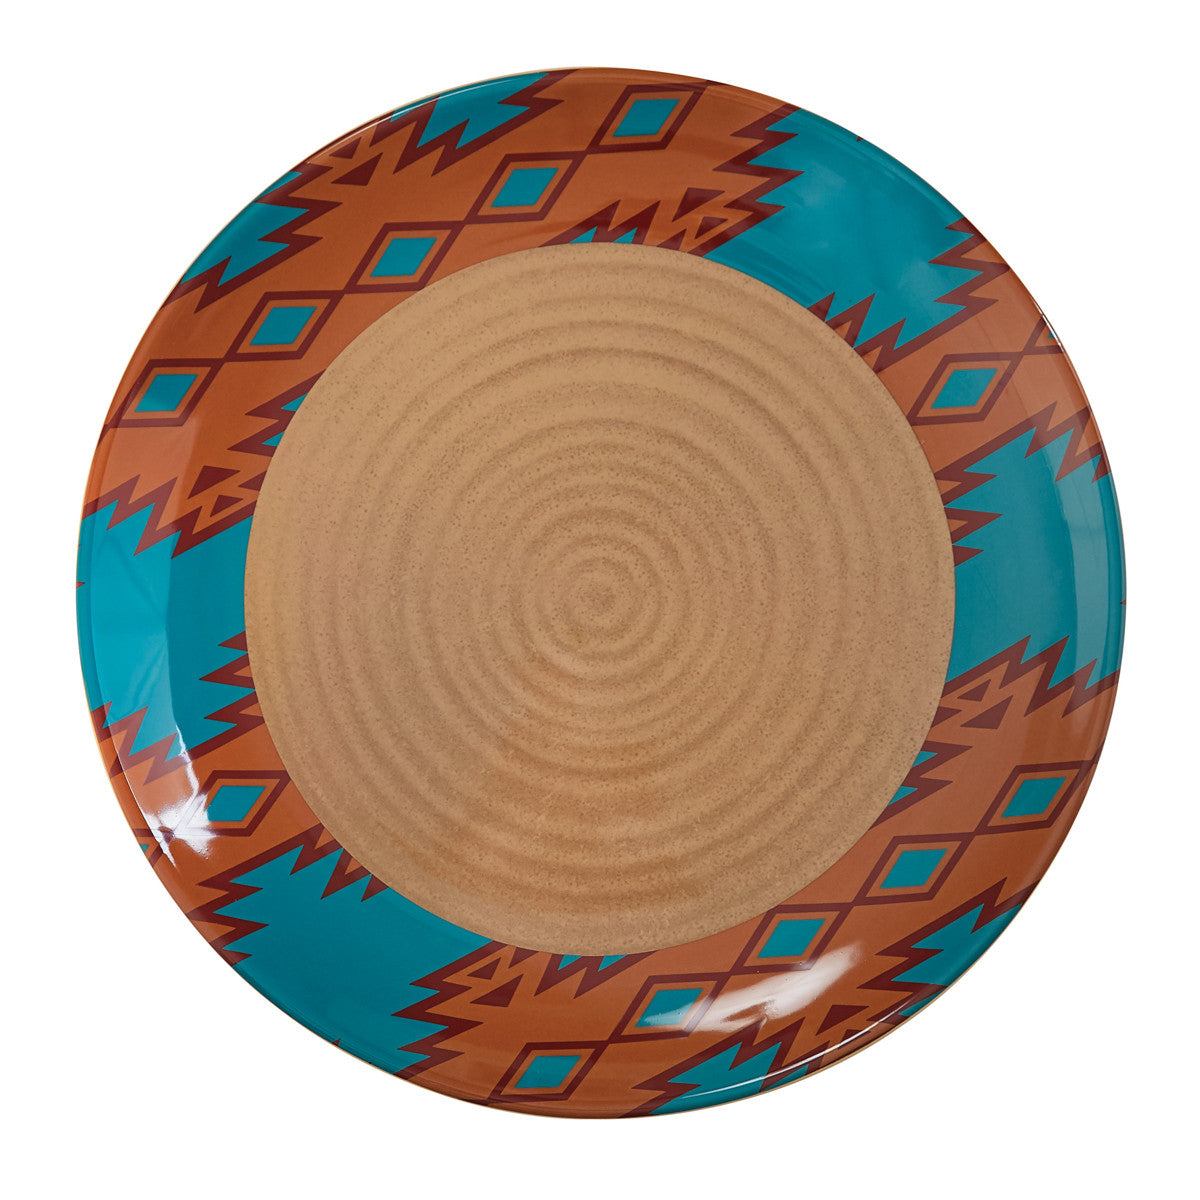 Southwest Pottery Dinner Plates - Set of 4 Park Designs